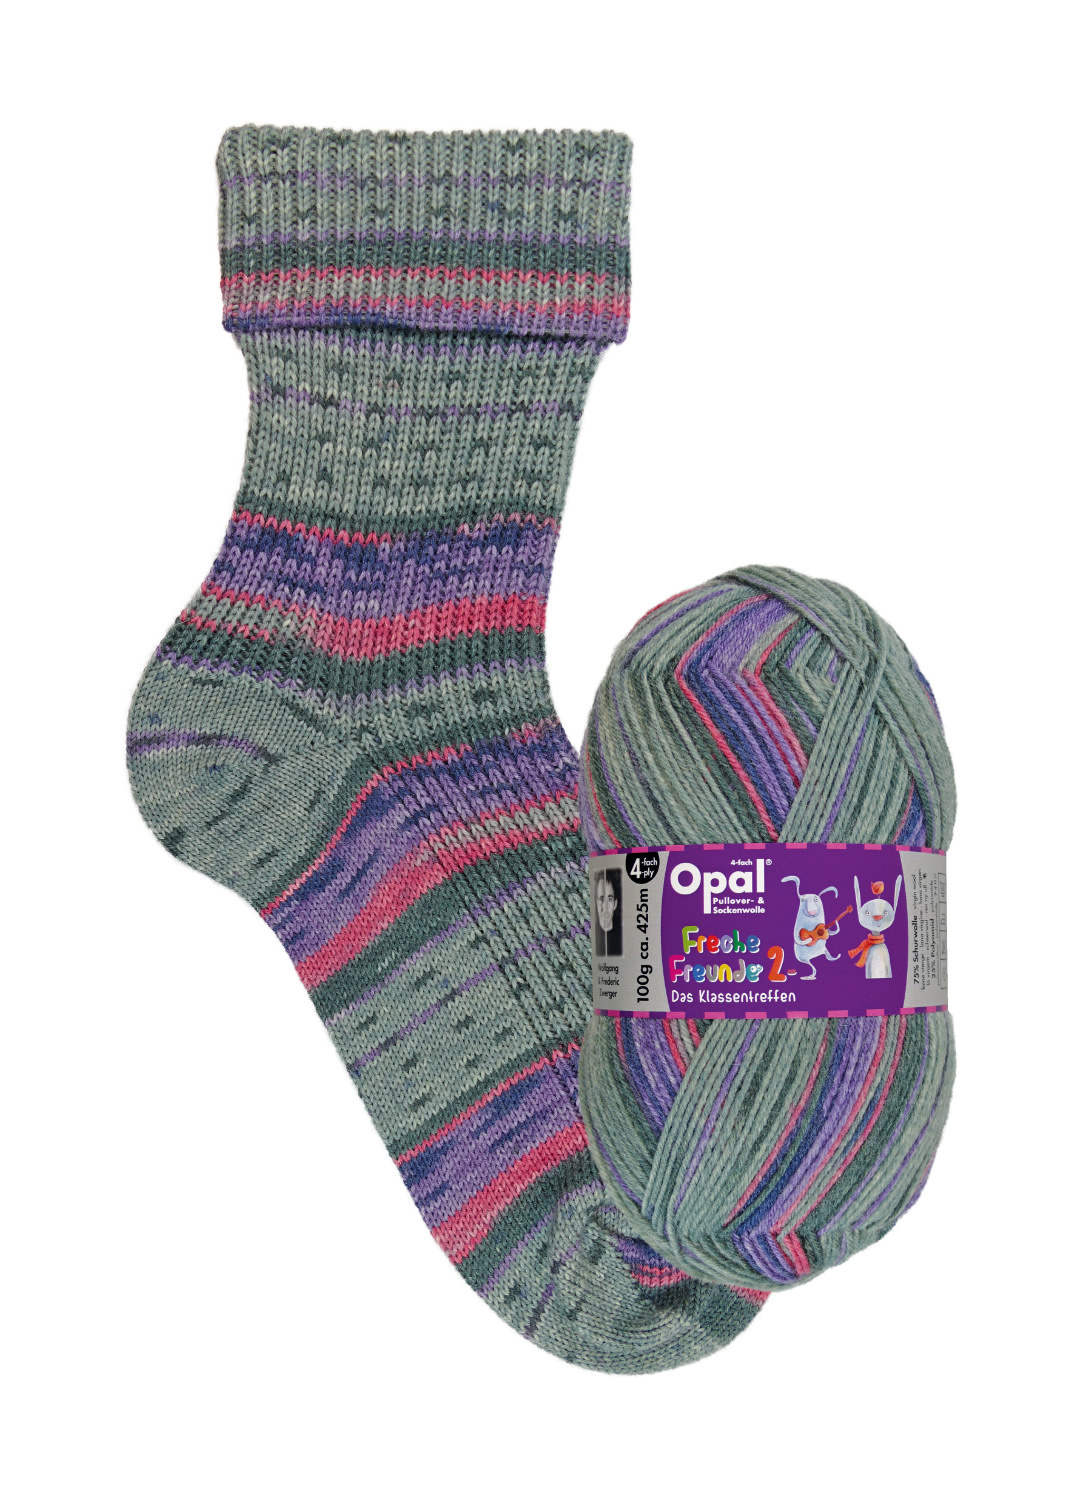 Opal Sock 4ply - Bernard Raves About Lisa/9953